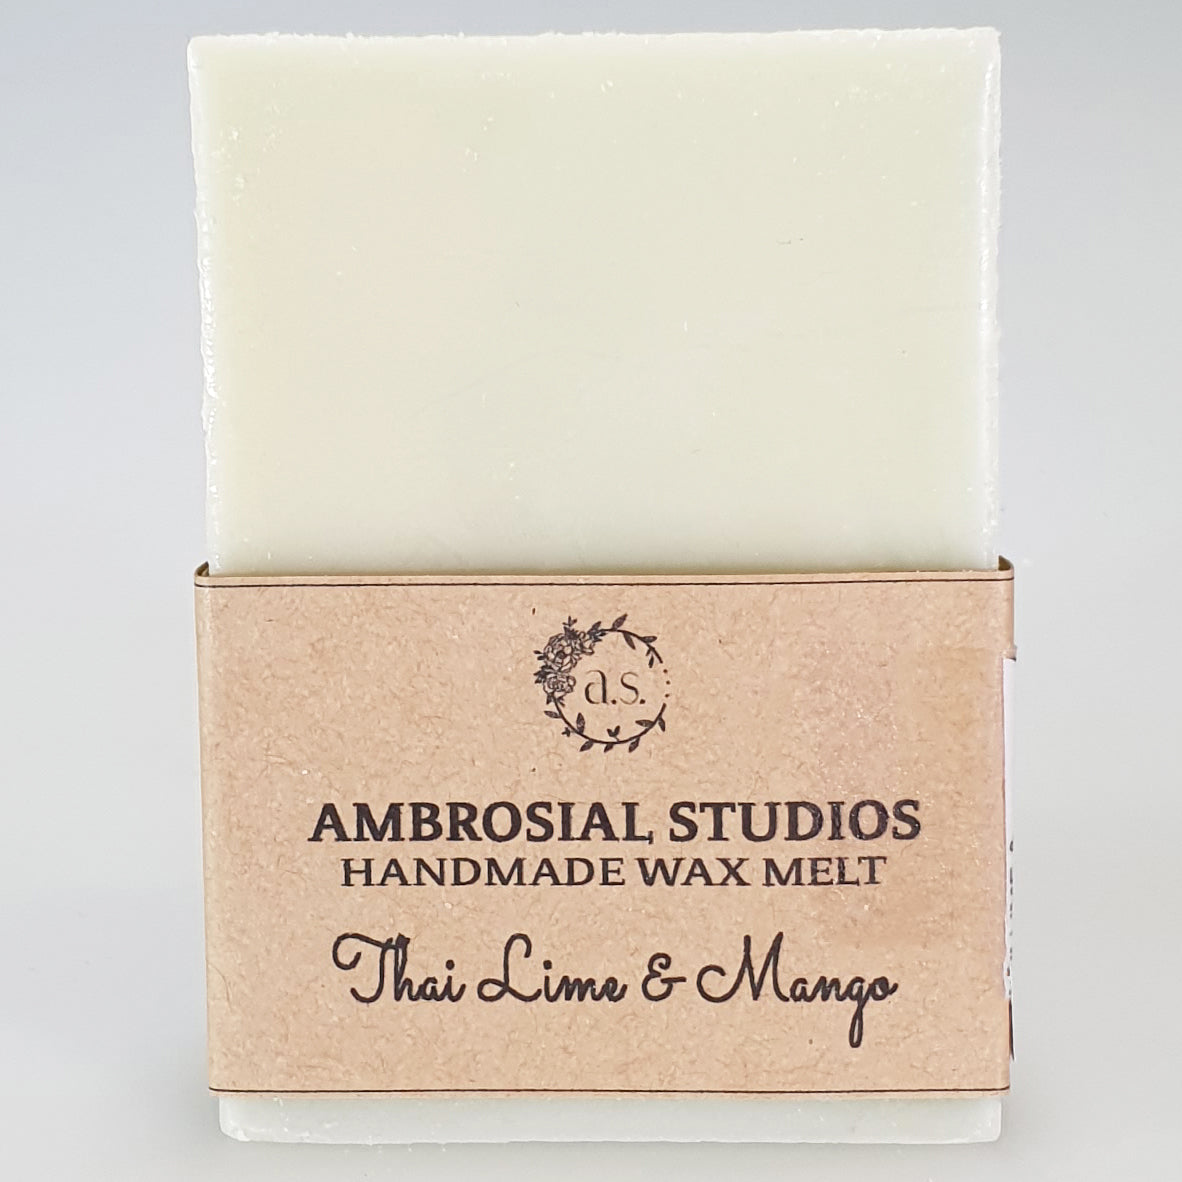 Ambrosial Studios - Handmade Wax Melt - Thai Lime & Mango